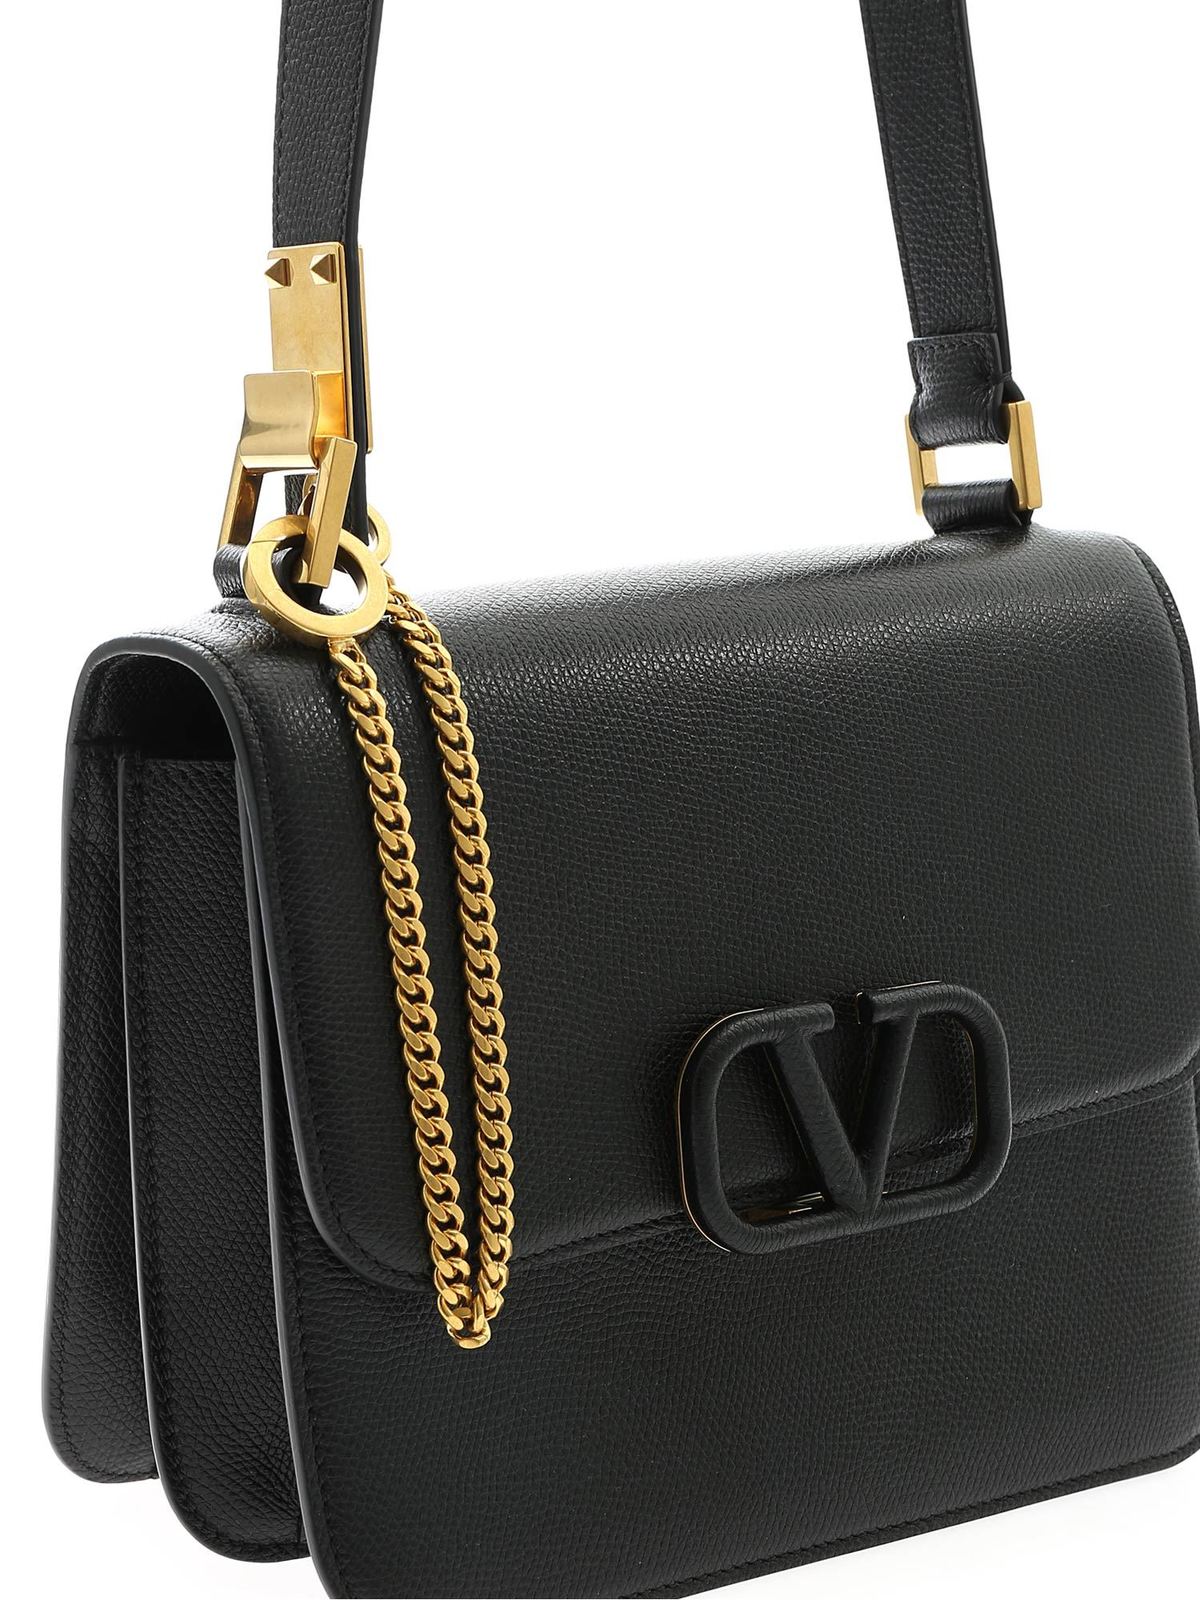 Valentino Garavani Vsling Mini Leather Shoulder Bag Black